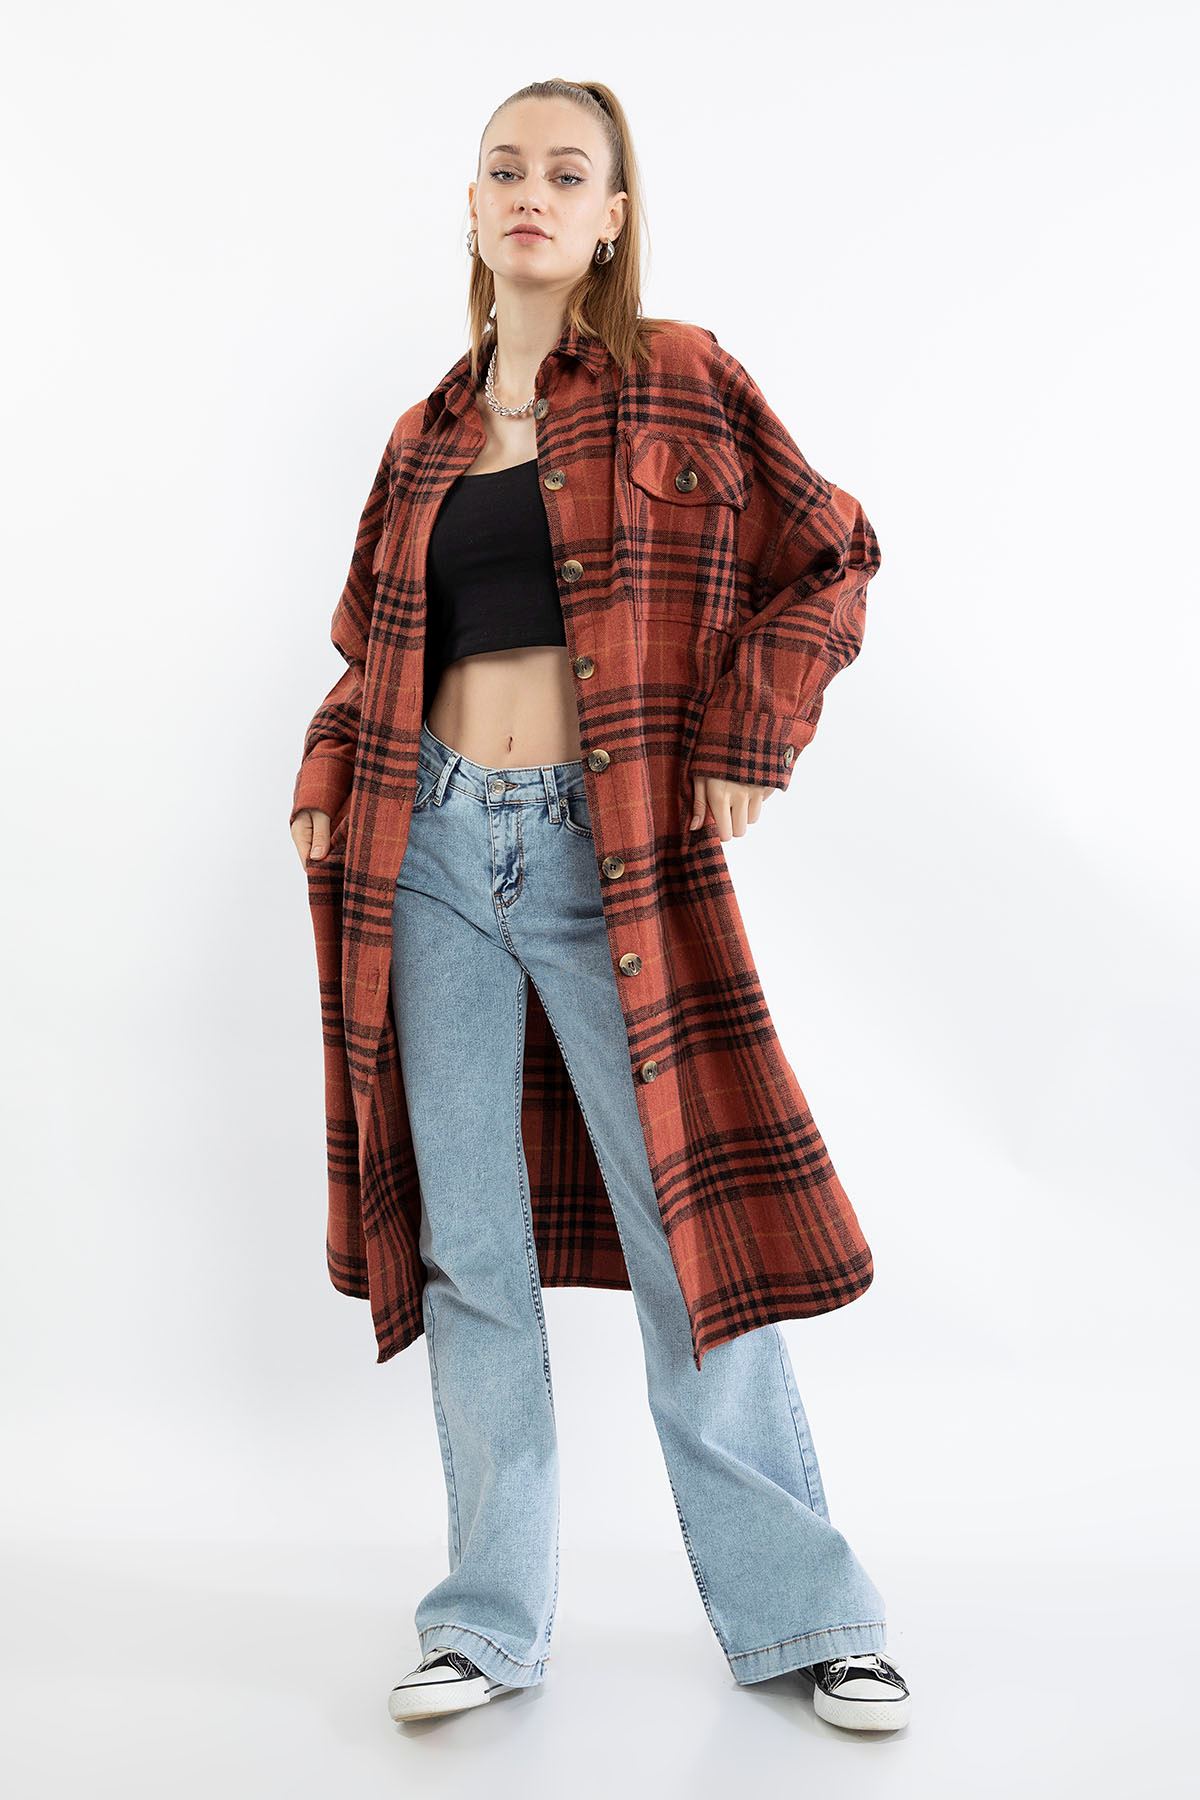 Lumberjack Fabric Long Sleeve Long Oversize Plaid Women'S Shirt - Brick 